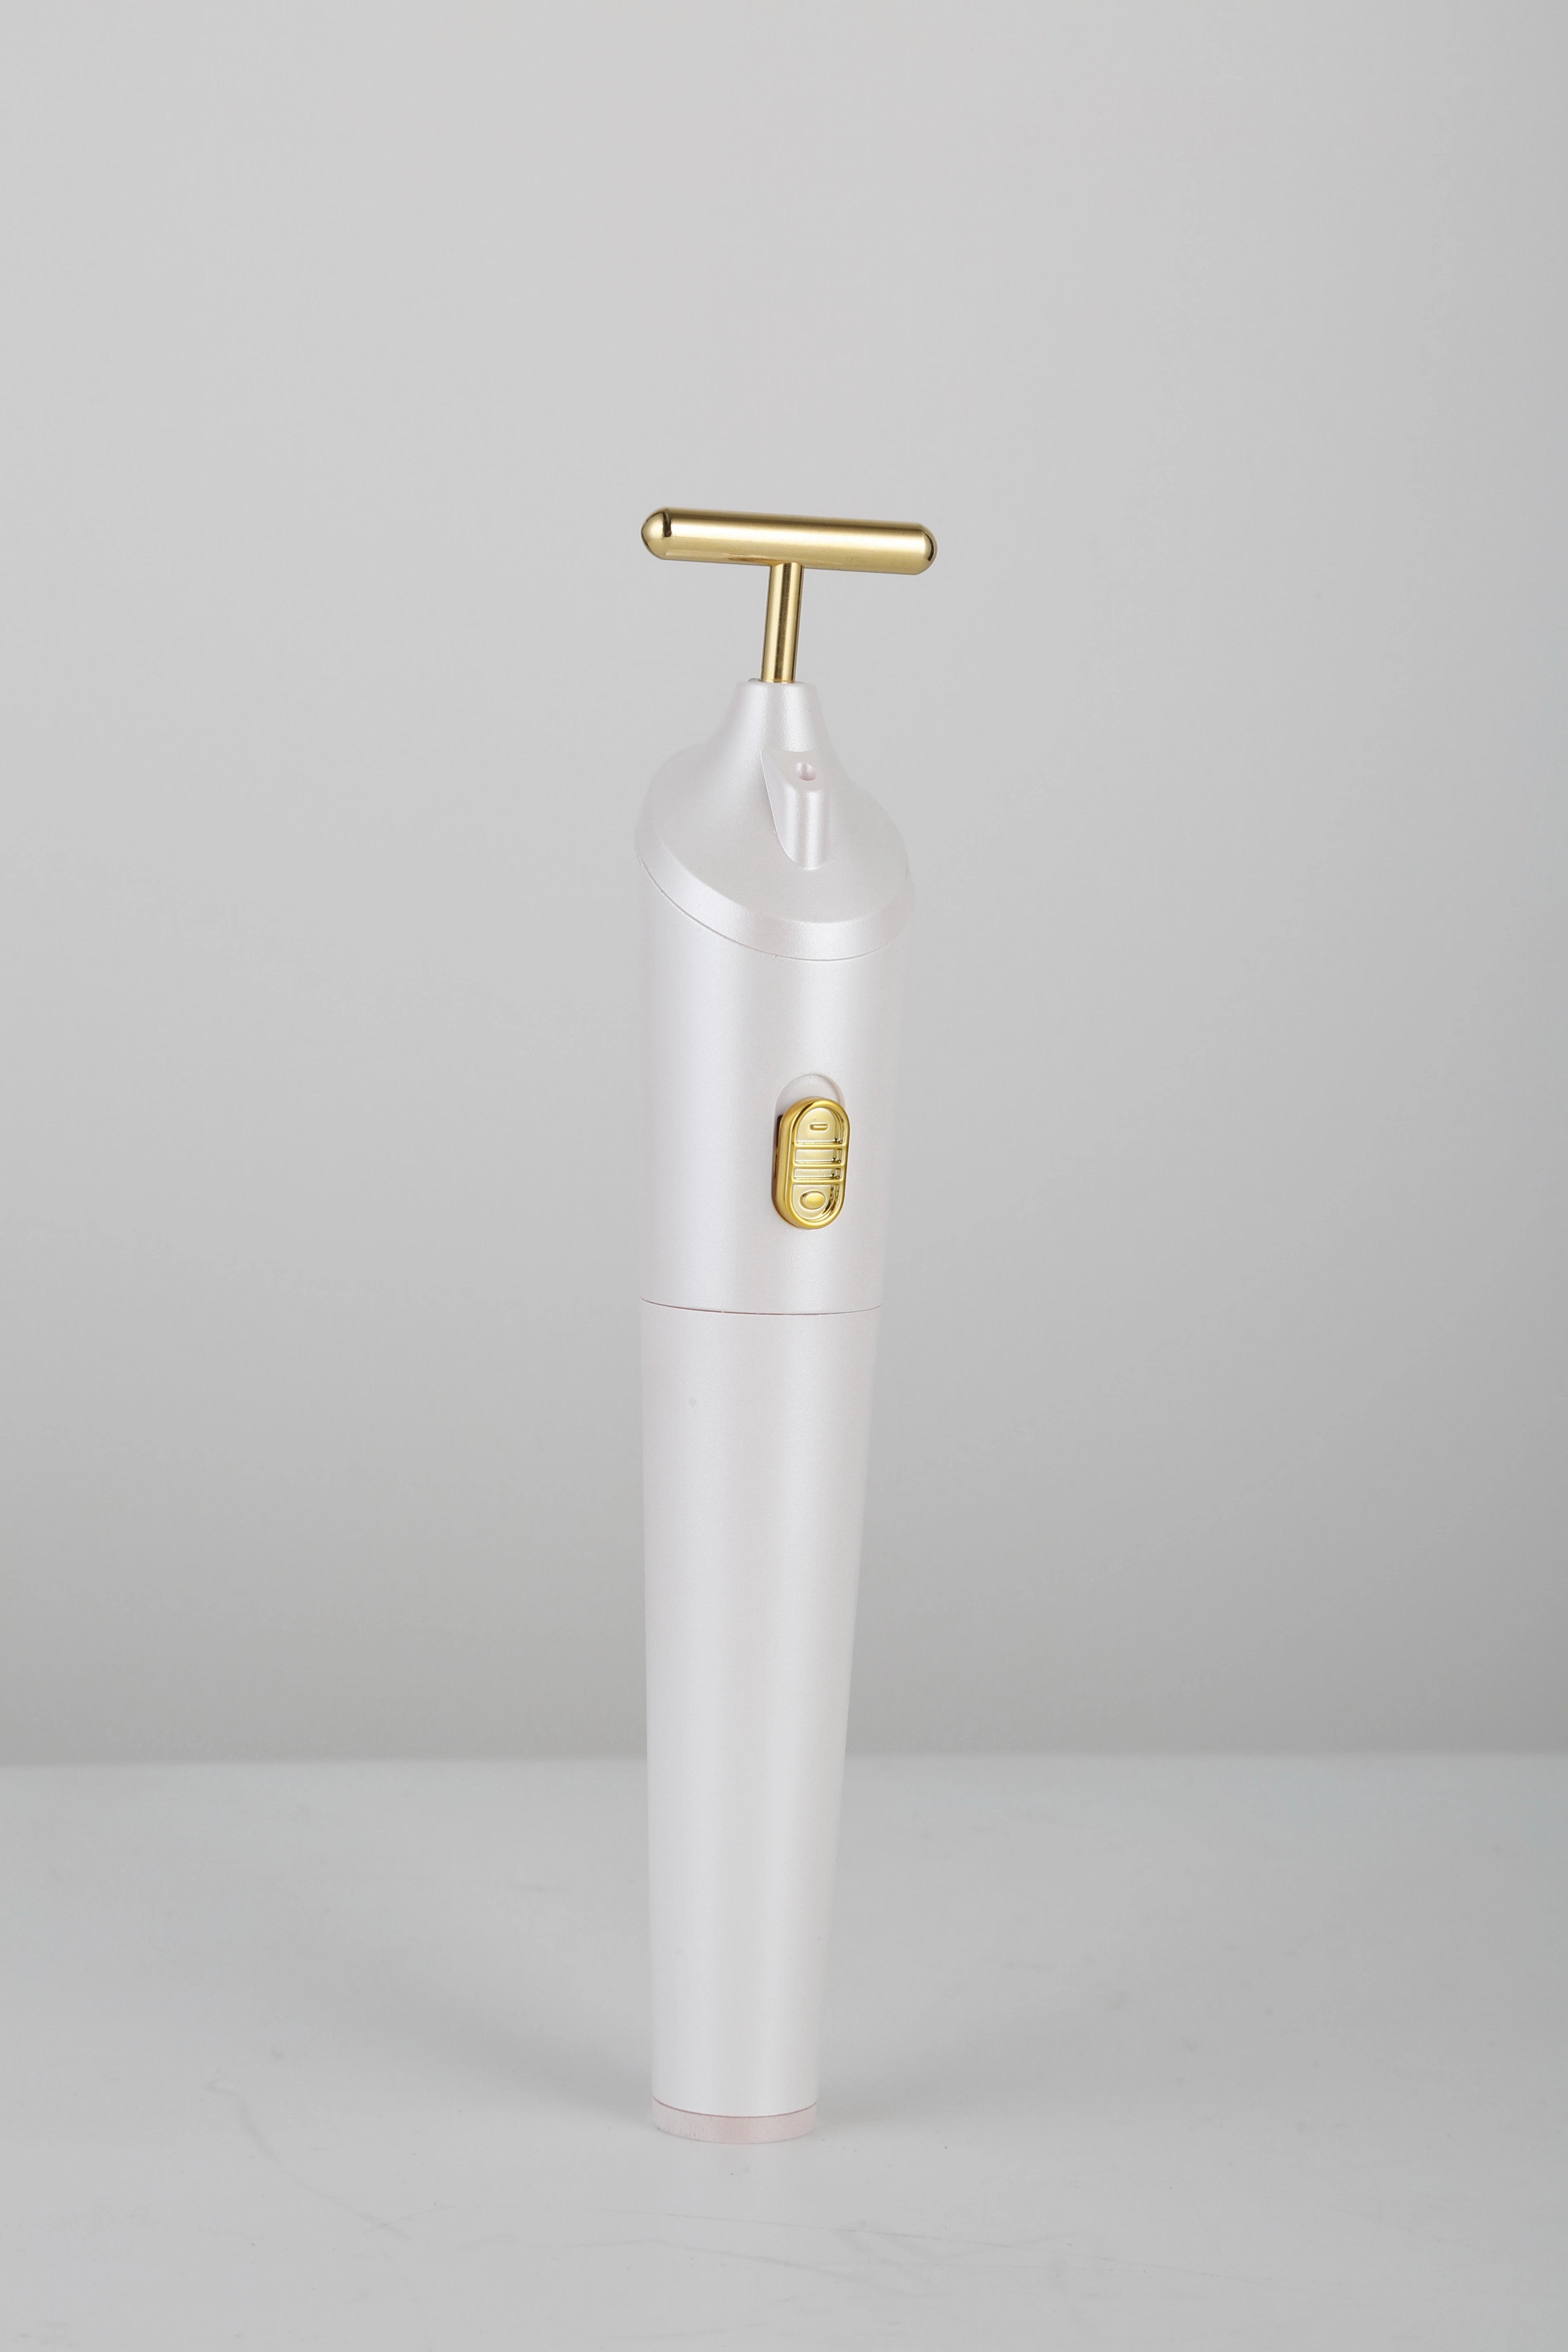 Sainbeauty Wholesale Thin Face Massage Stick Device microcurrent beauty bar face massager Gold Vibration Lifting Stick